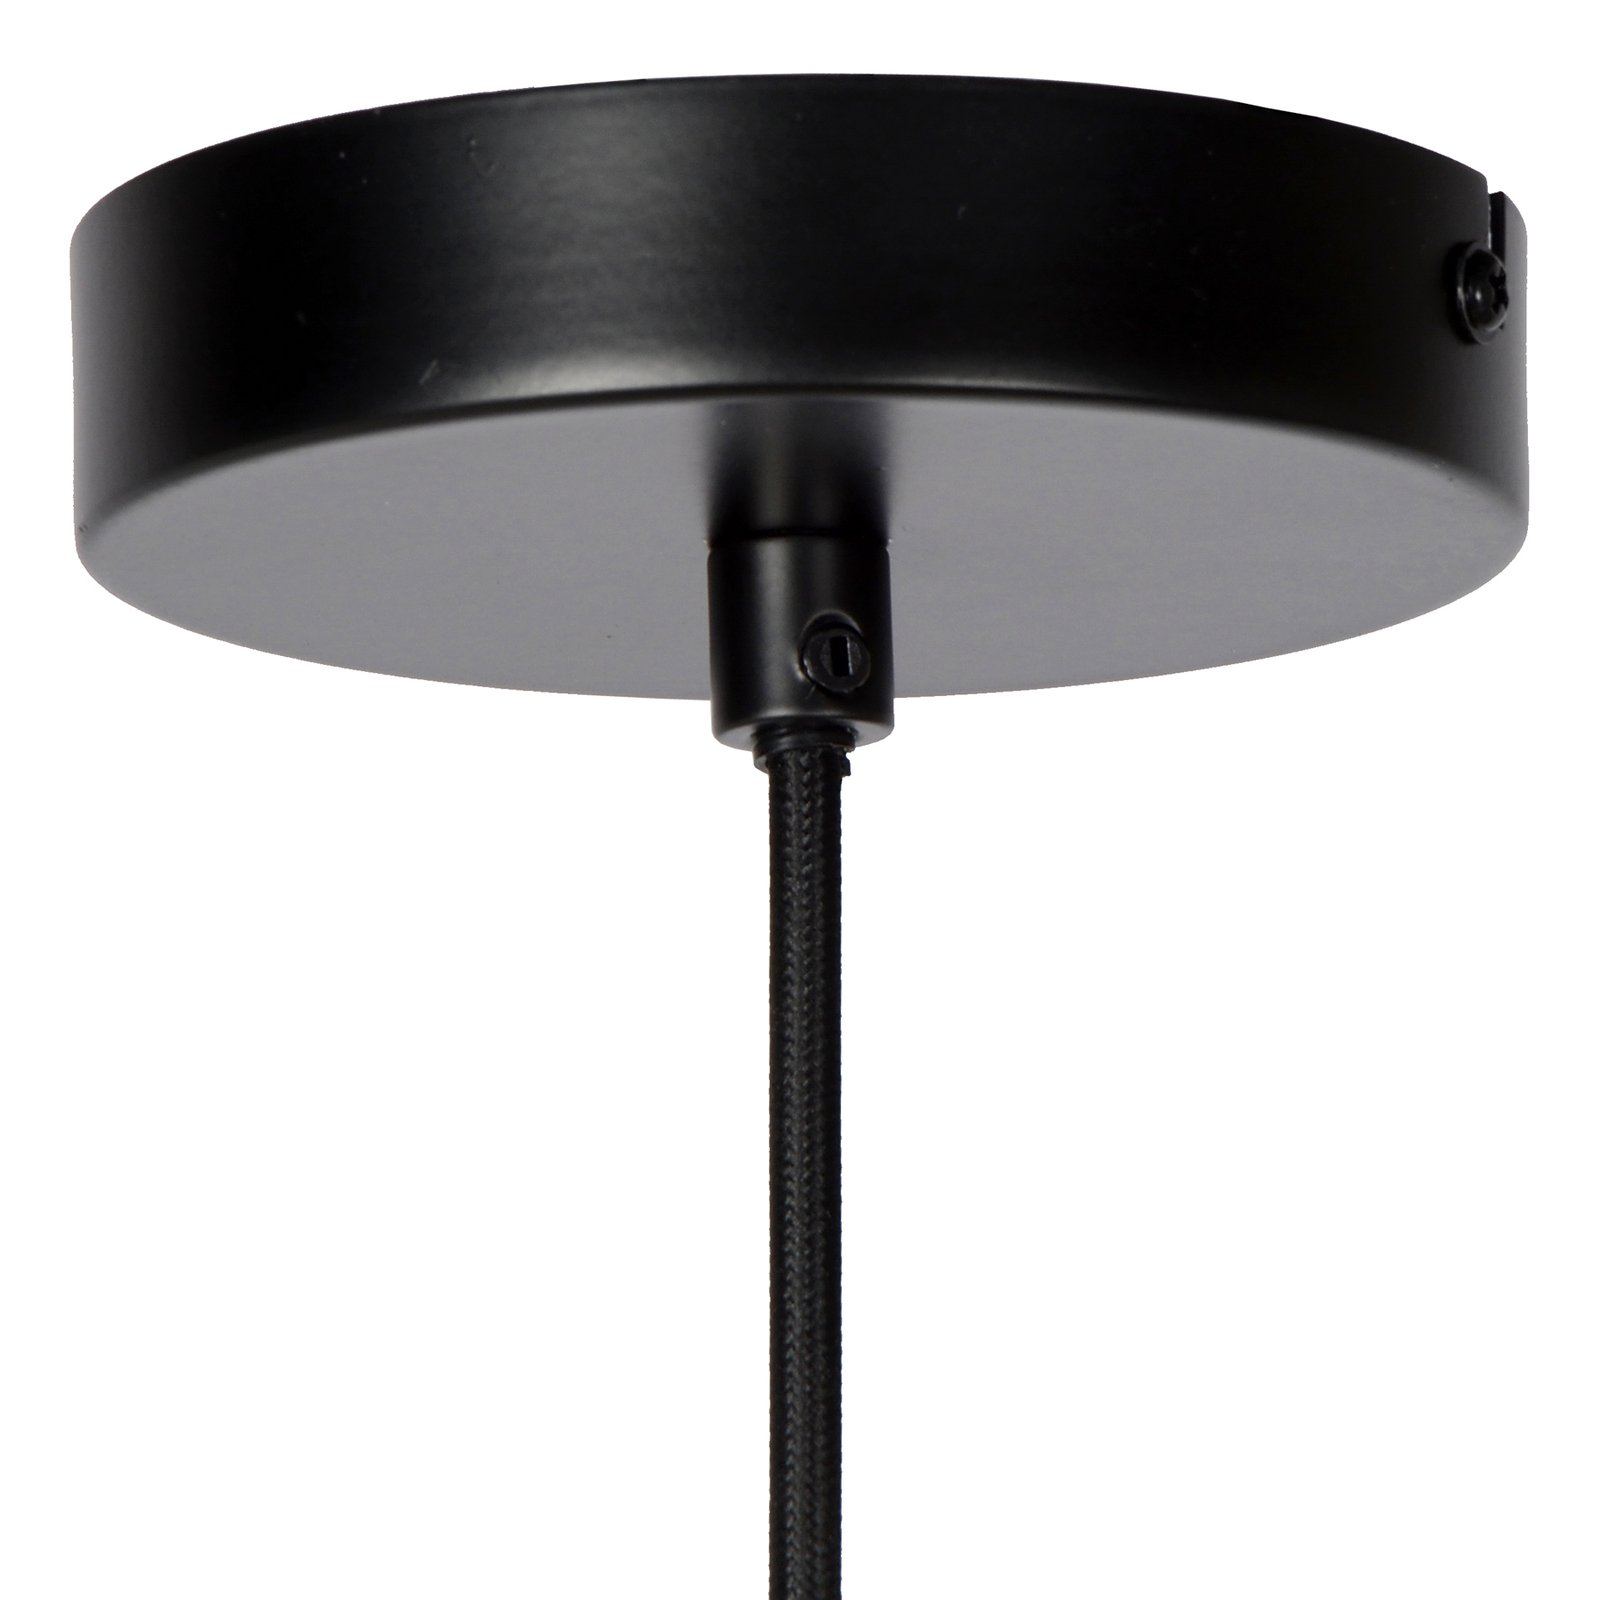 Hanglamp Joanet met rookglas, 1-lamp